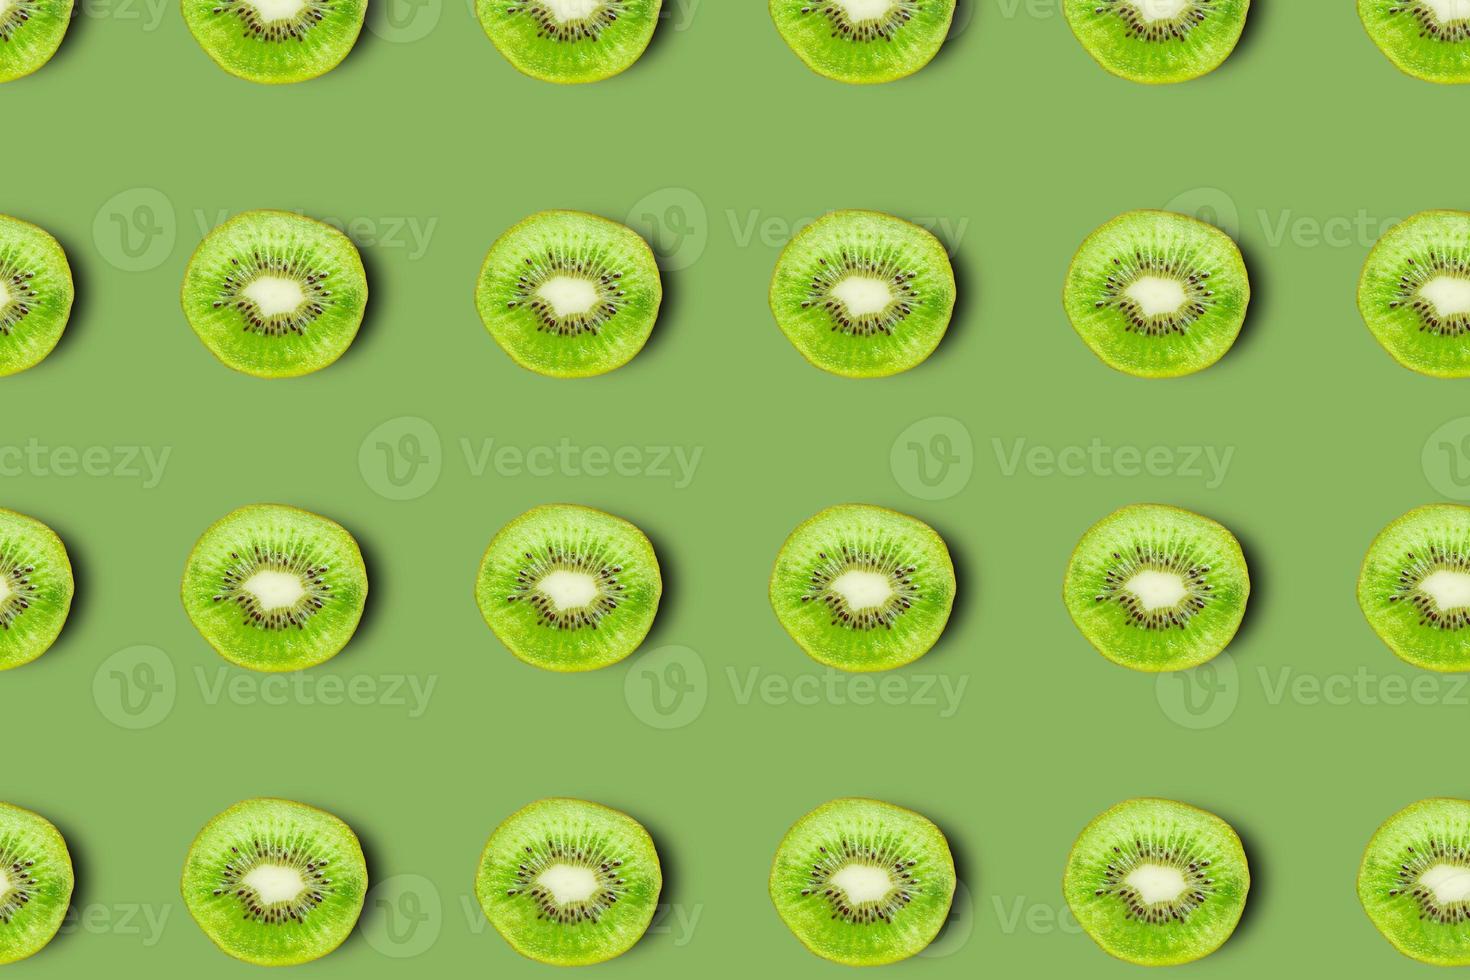 patrón de kiwis sobre fondo verde, rodajas similares. foto